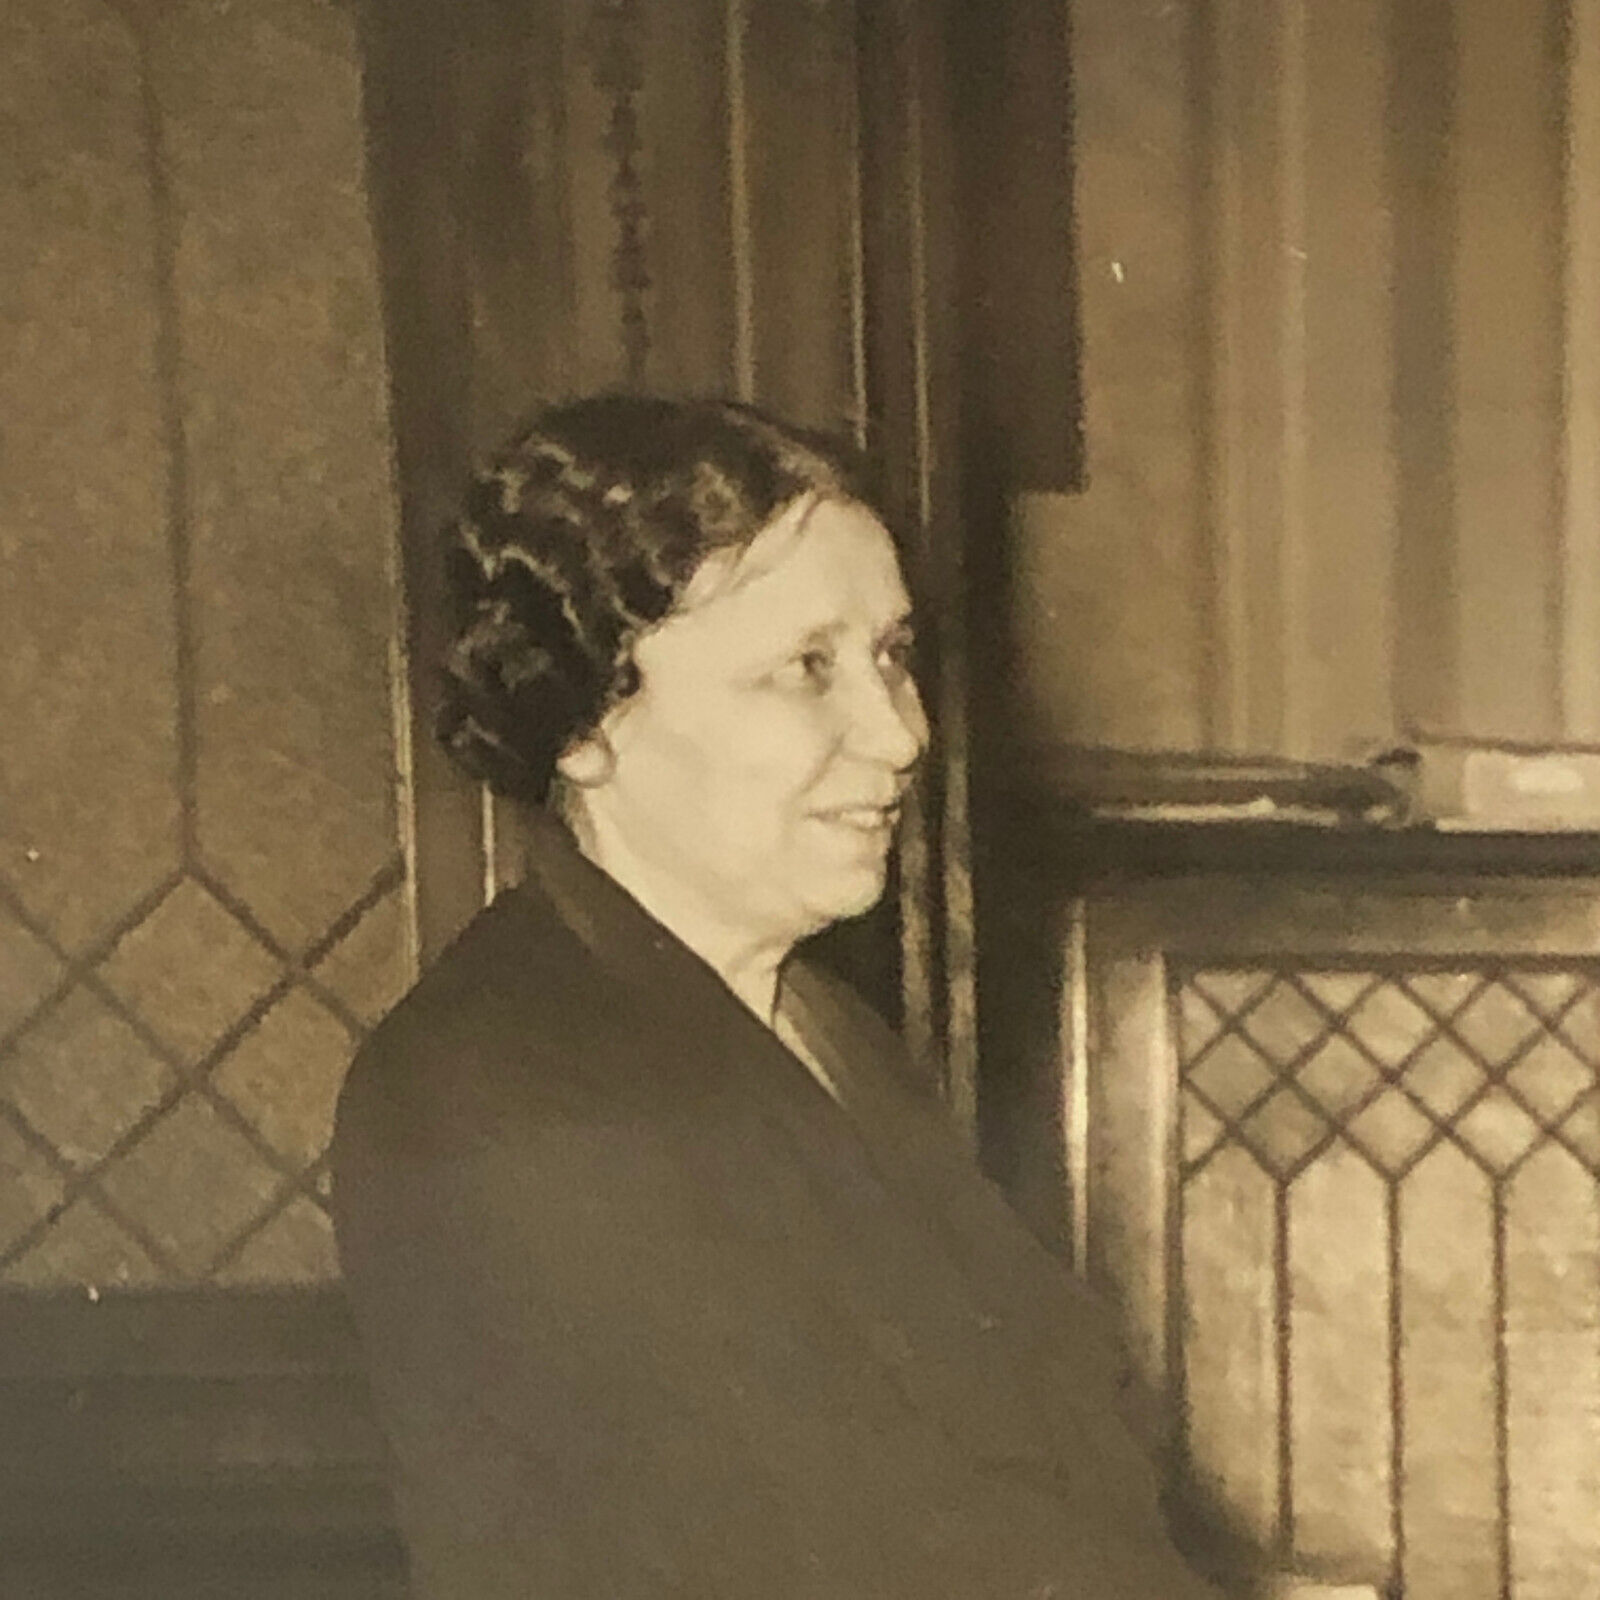 Press Photo Photograph Hattie N Caraway First Woman Senator 1933 Underwood Photo